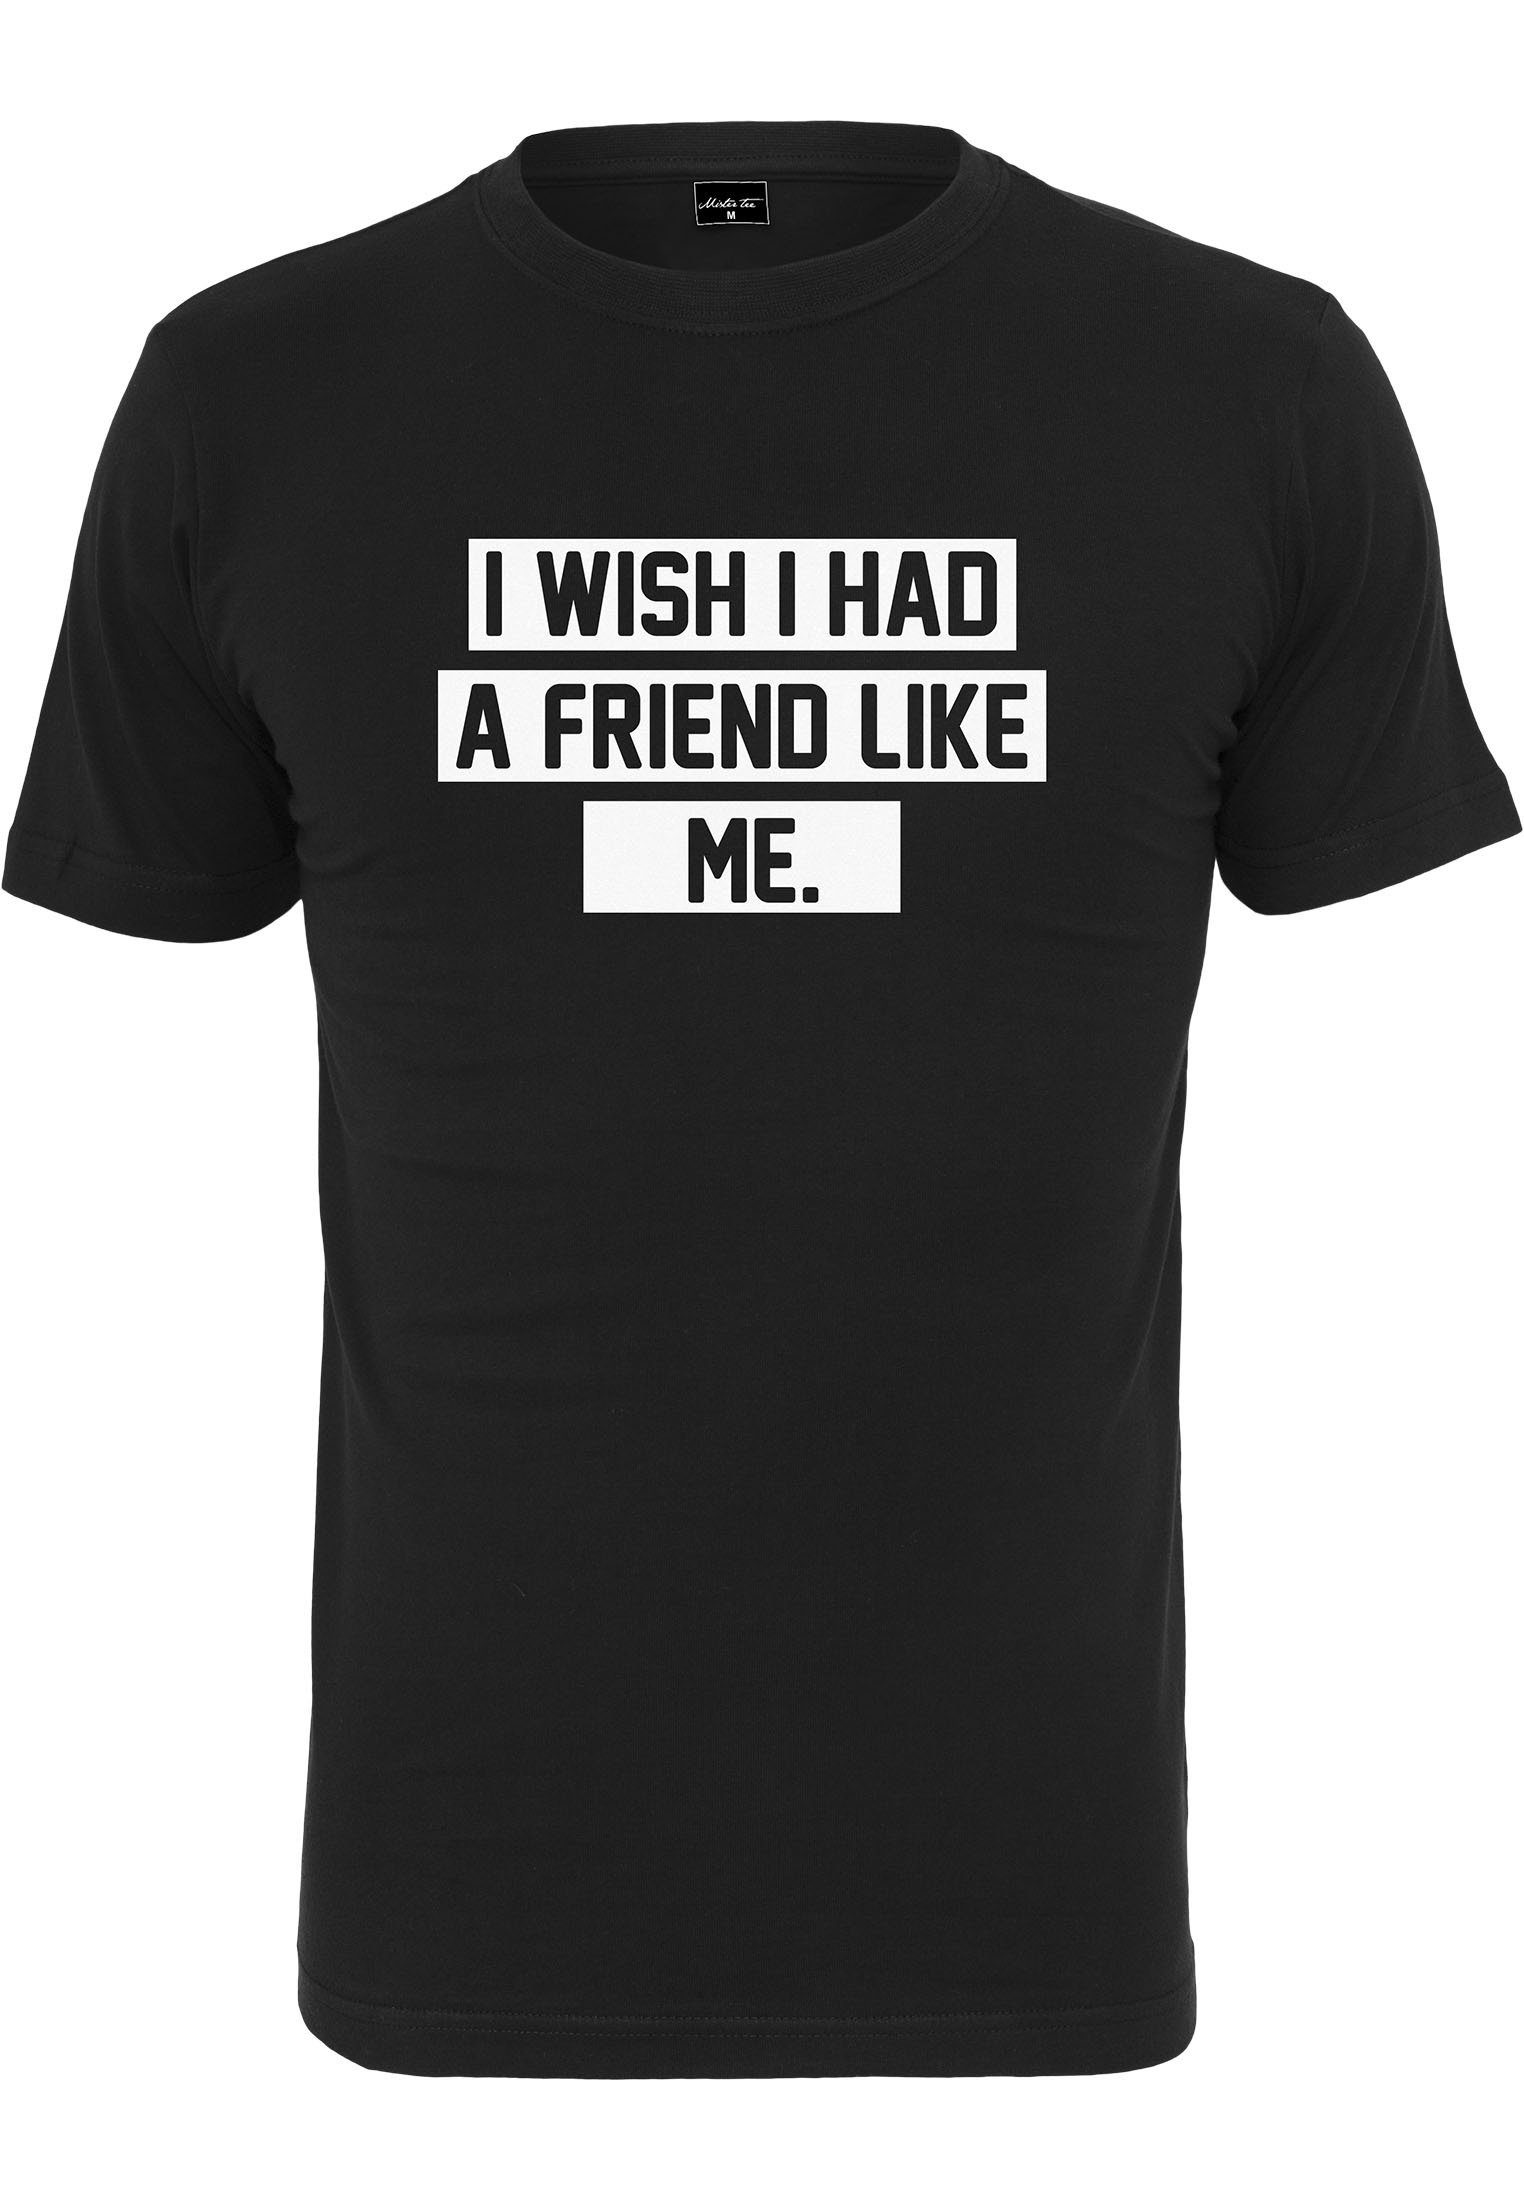 Me MT793 (1-tlg) Tee MisterTee Like Herren black Friend T-Shirt Me Like Friend